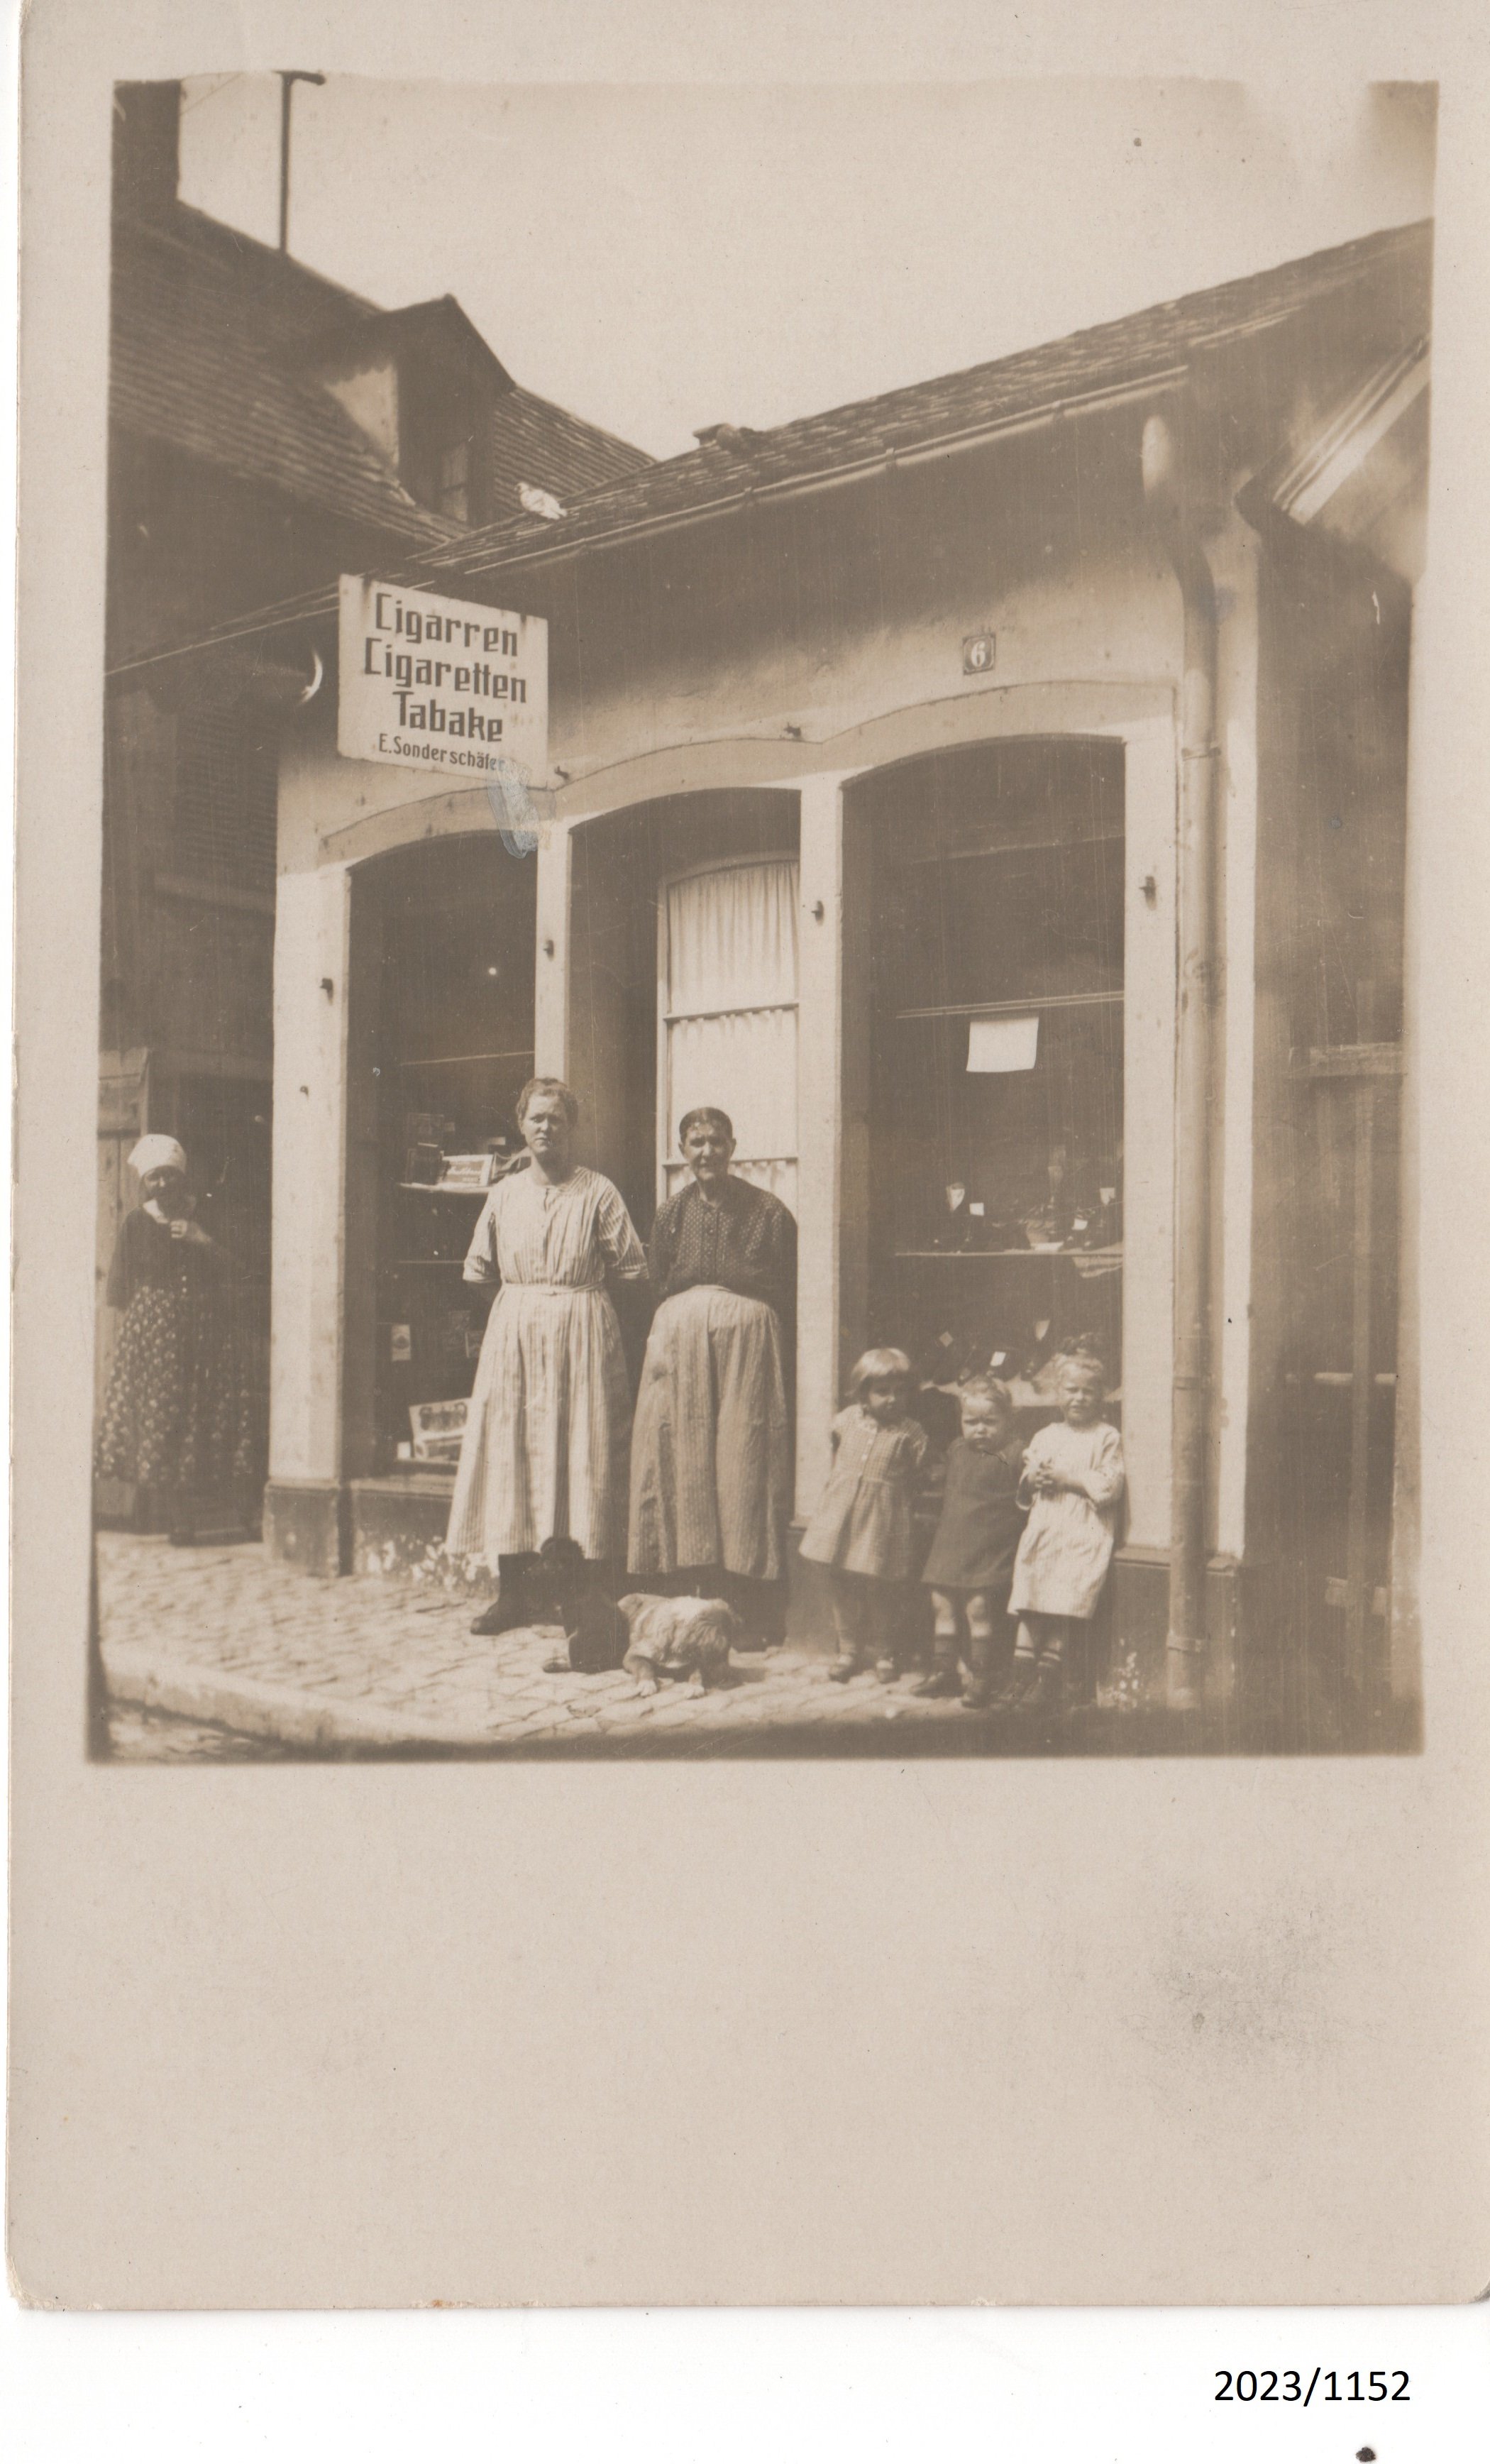 Tabakladen in Bad Dürkheim, 1920er Jahre (Stadtmuseum Bad Dürkheim im Kulturzentrum Haus Catoir CC BY-NC-SA)